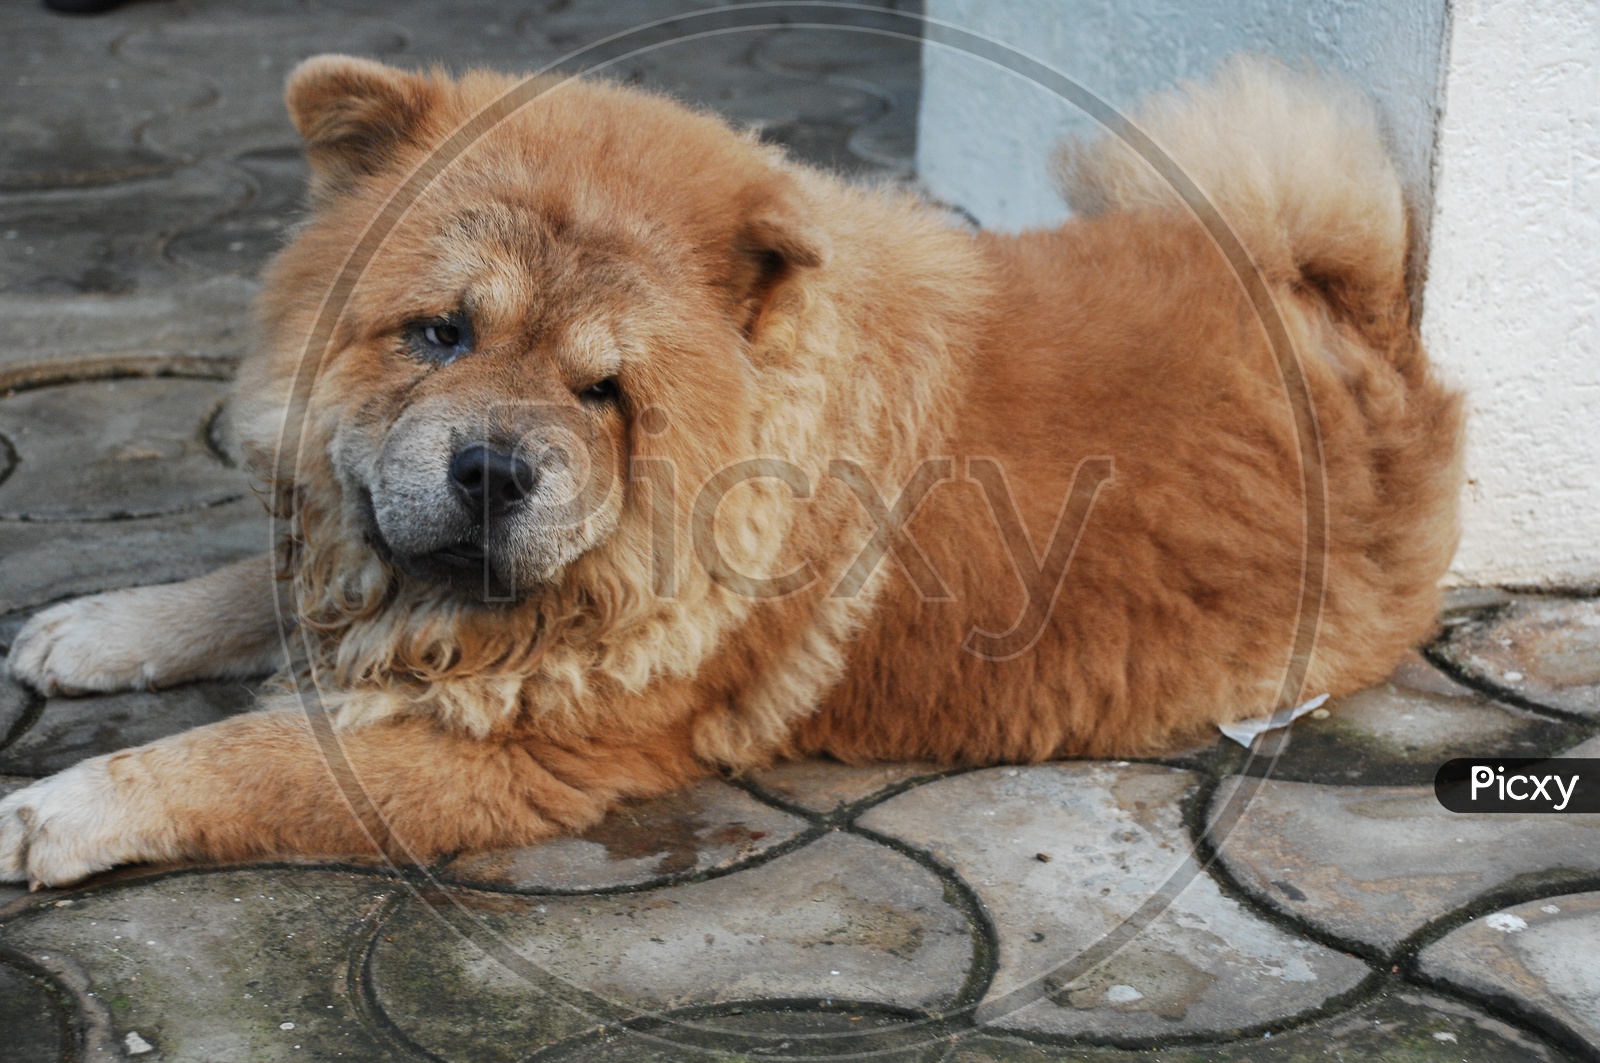 A Chow Chow dog sitting on the floor